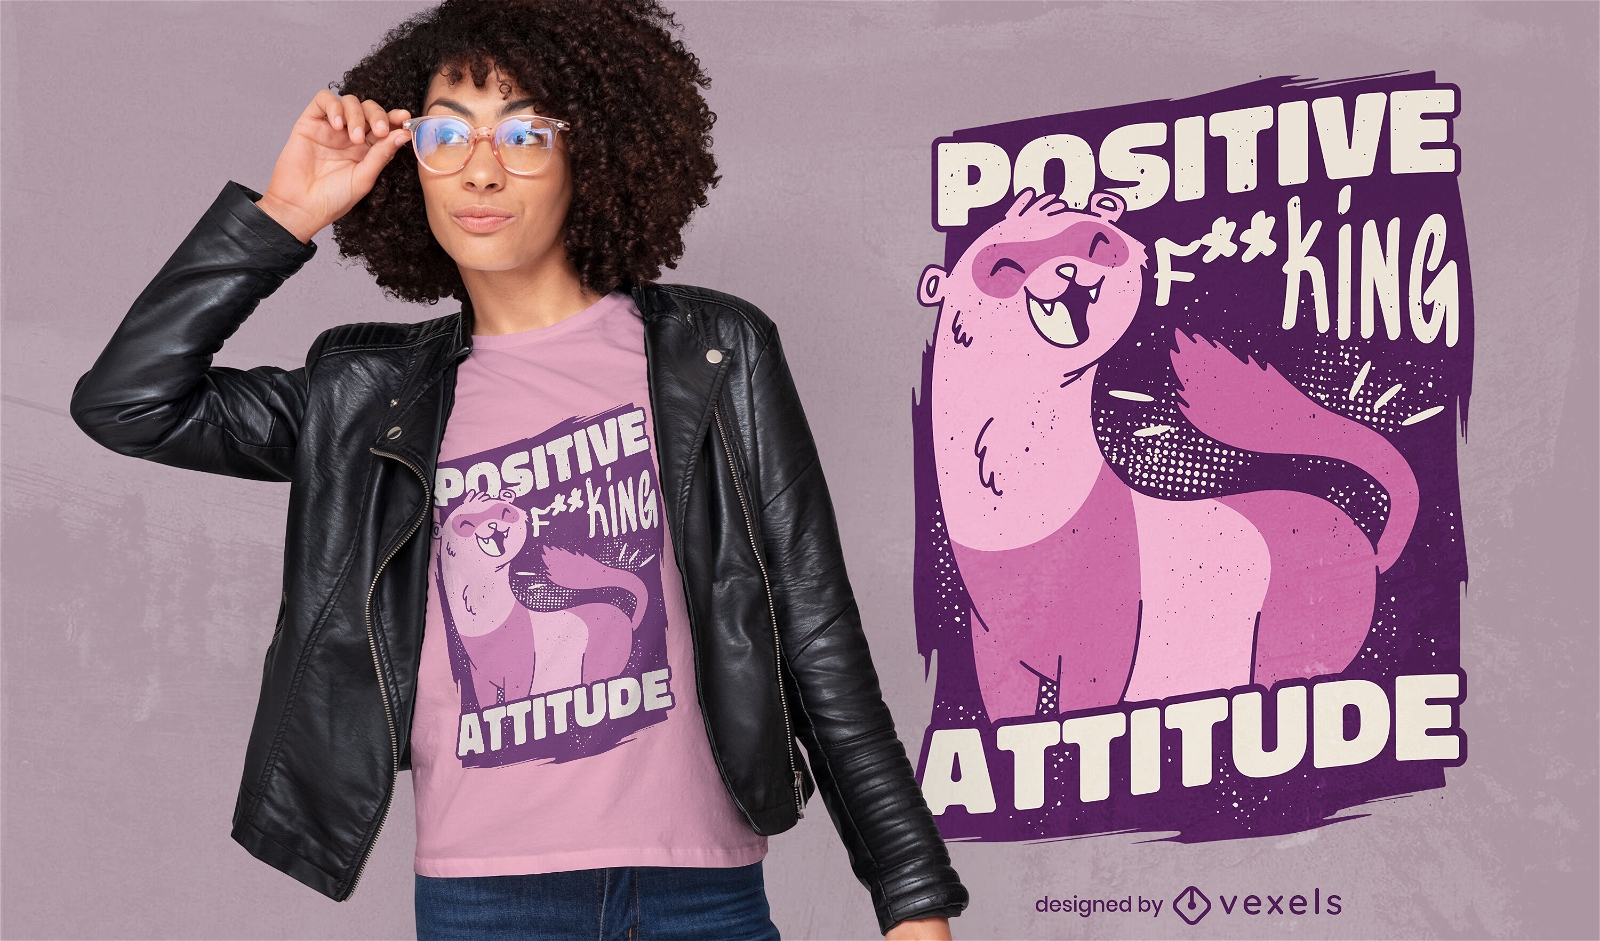 Dise?o de camiseta de hur?n de actitud positiva.